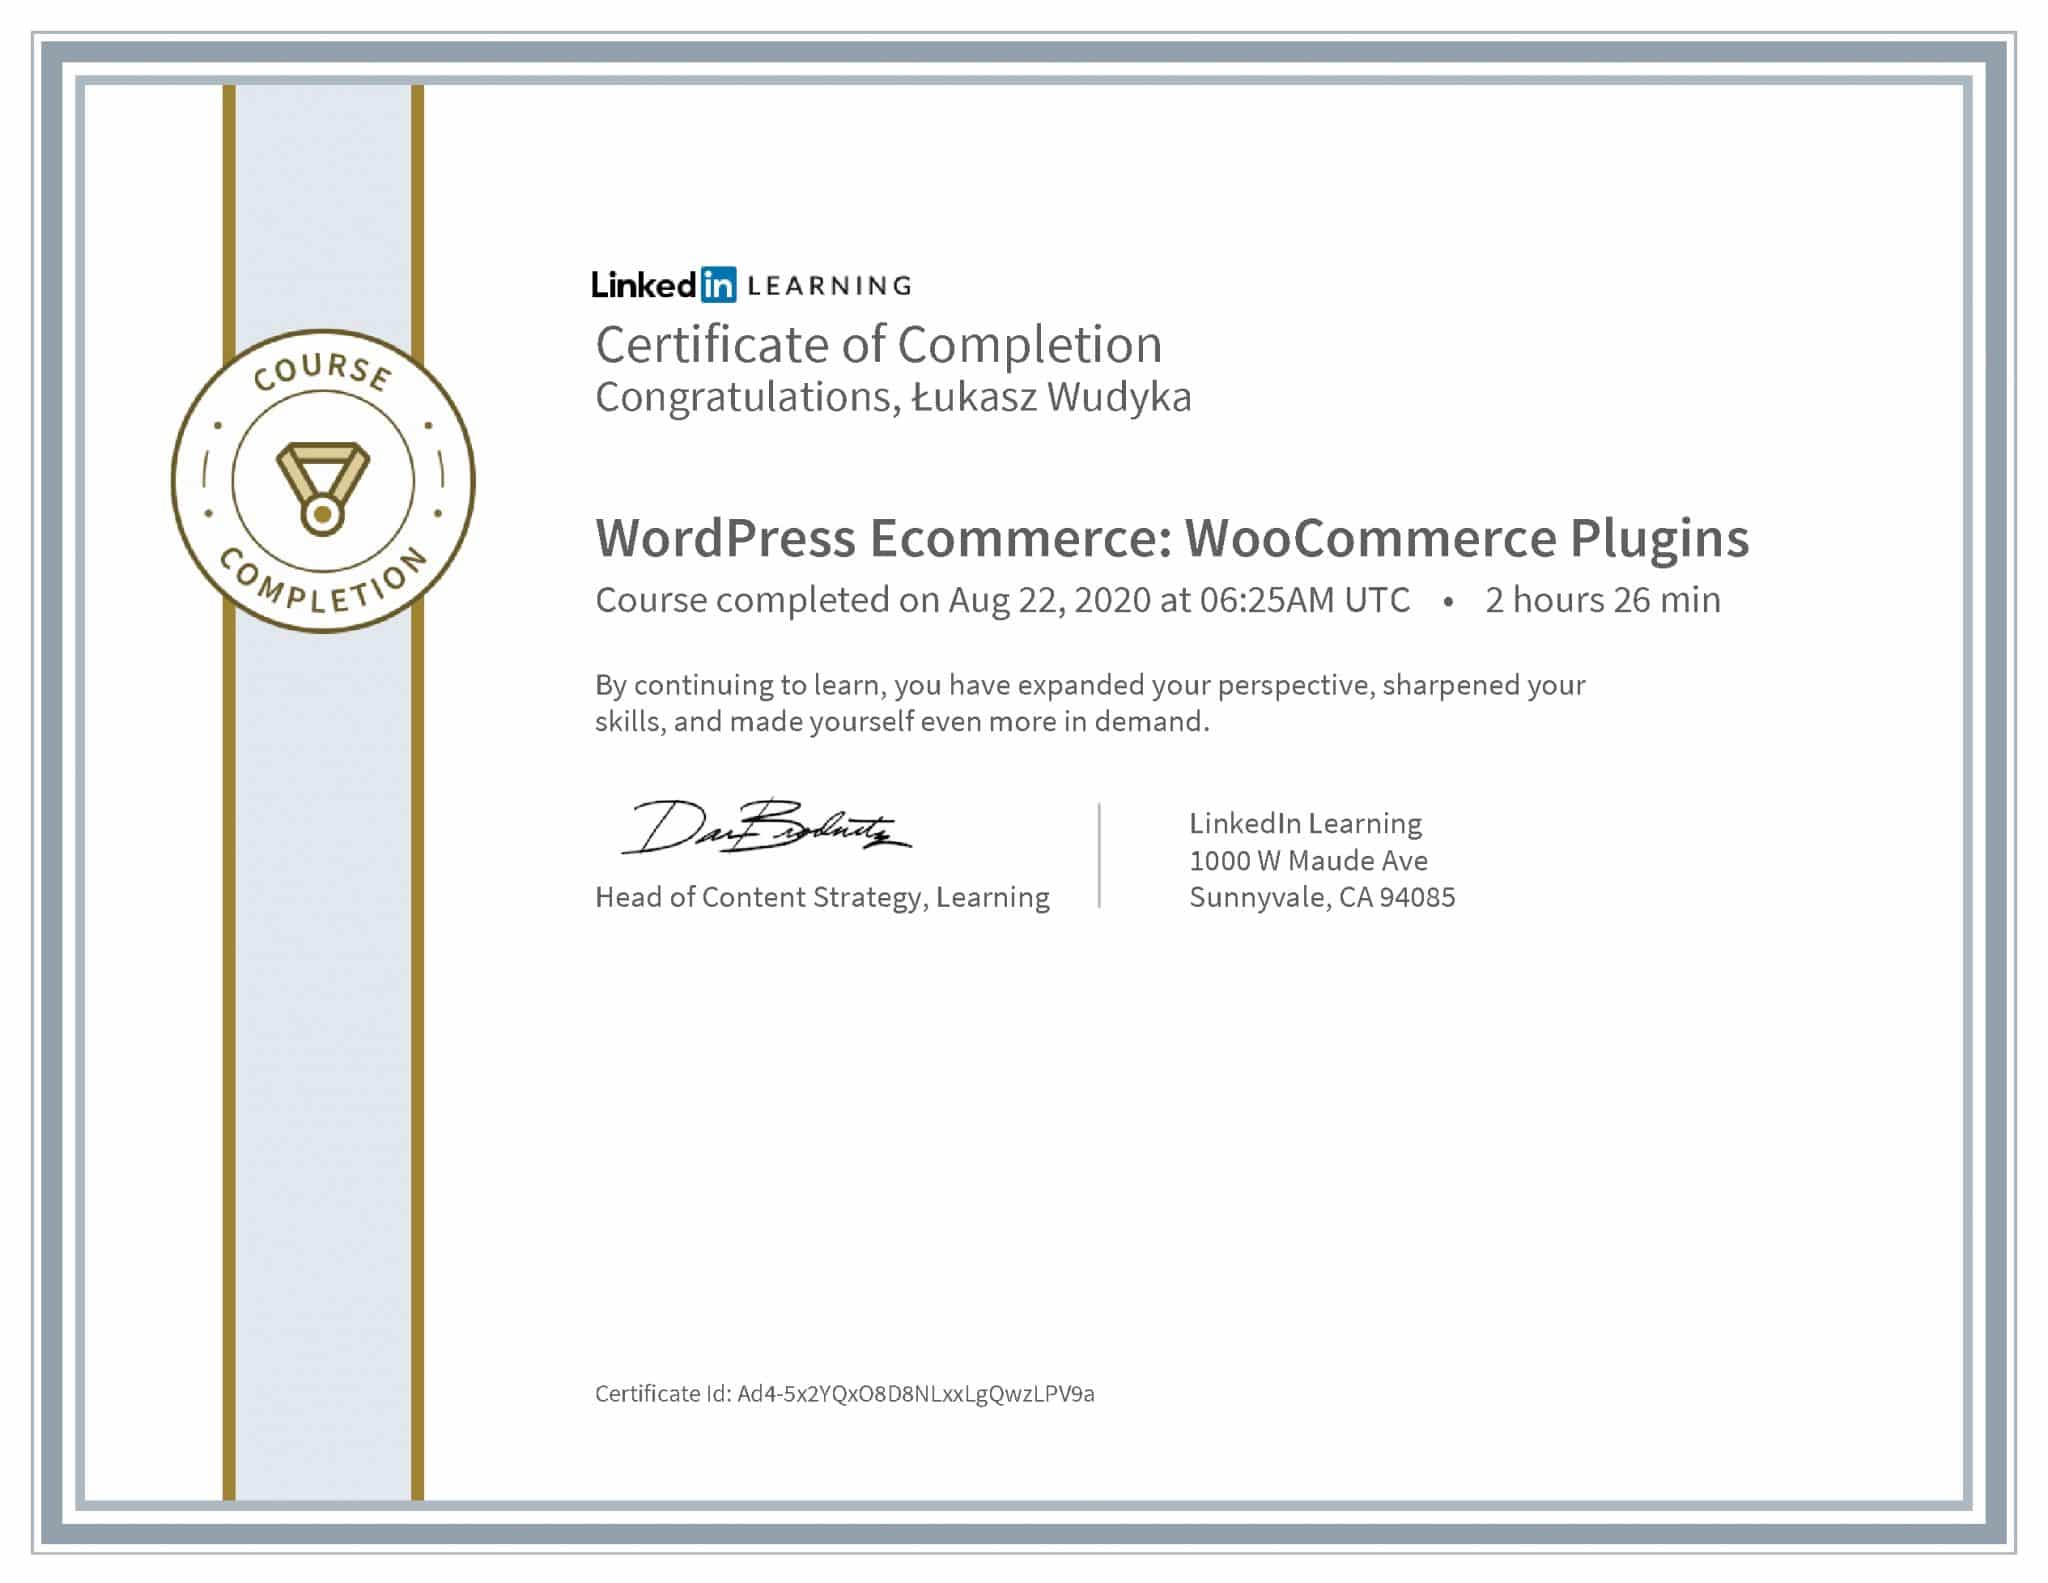 Łukasz Wudyka certyfikat LinkedIn WordPress Ecommerce: WooCommerce Plugins